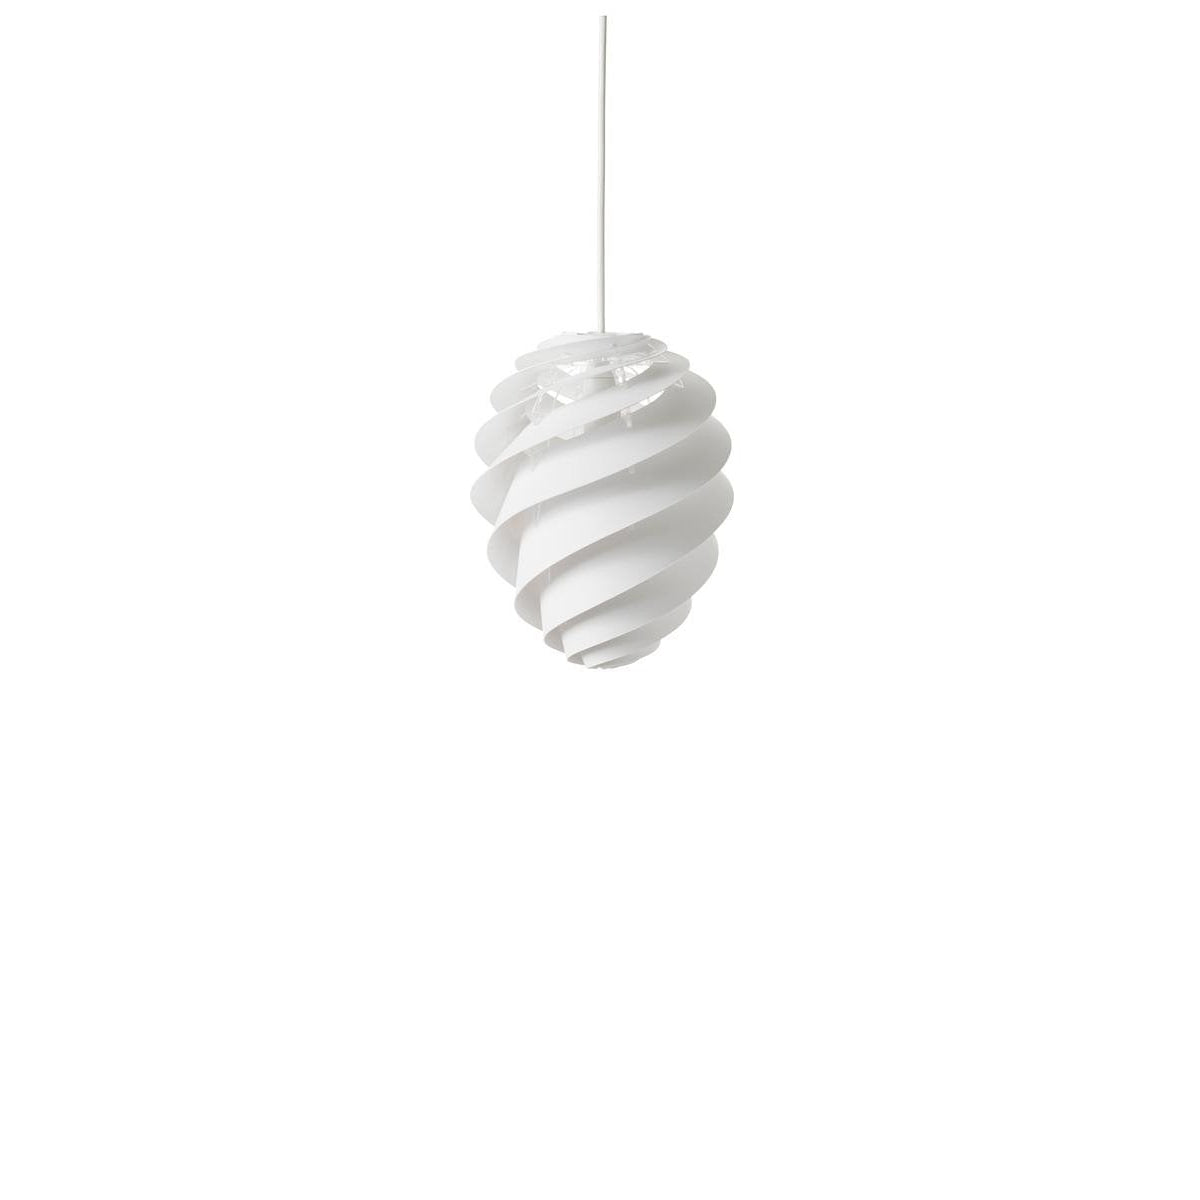 Le Klint Swirl II hänge, vit Ø 18 cm